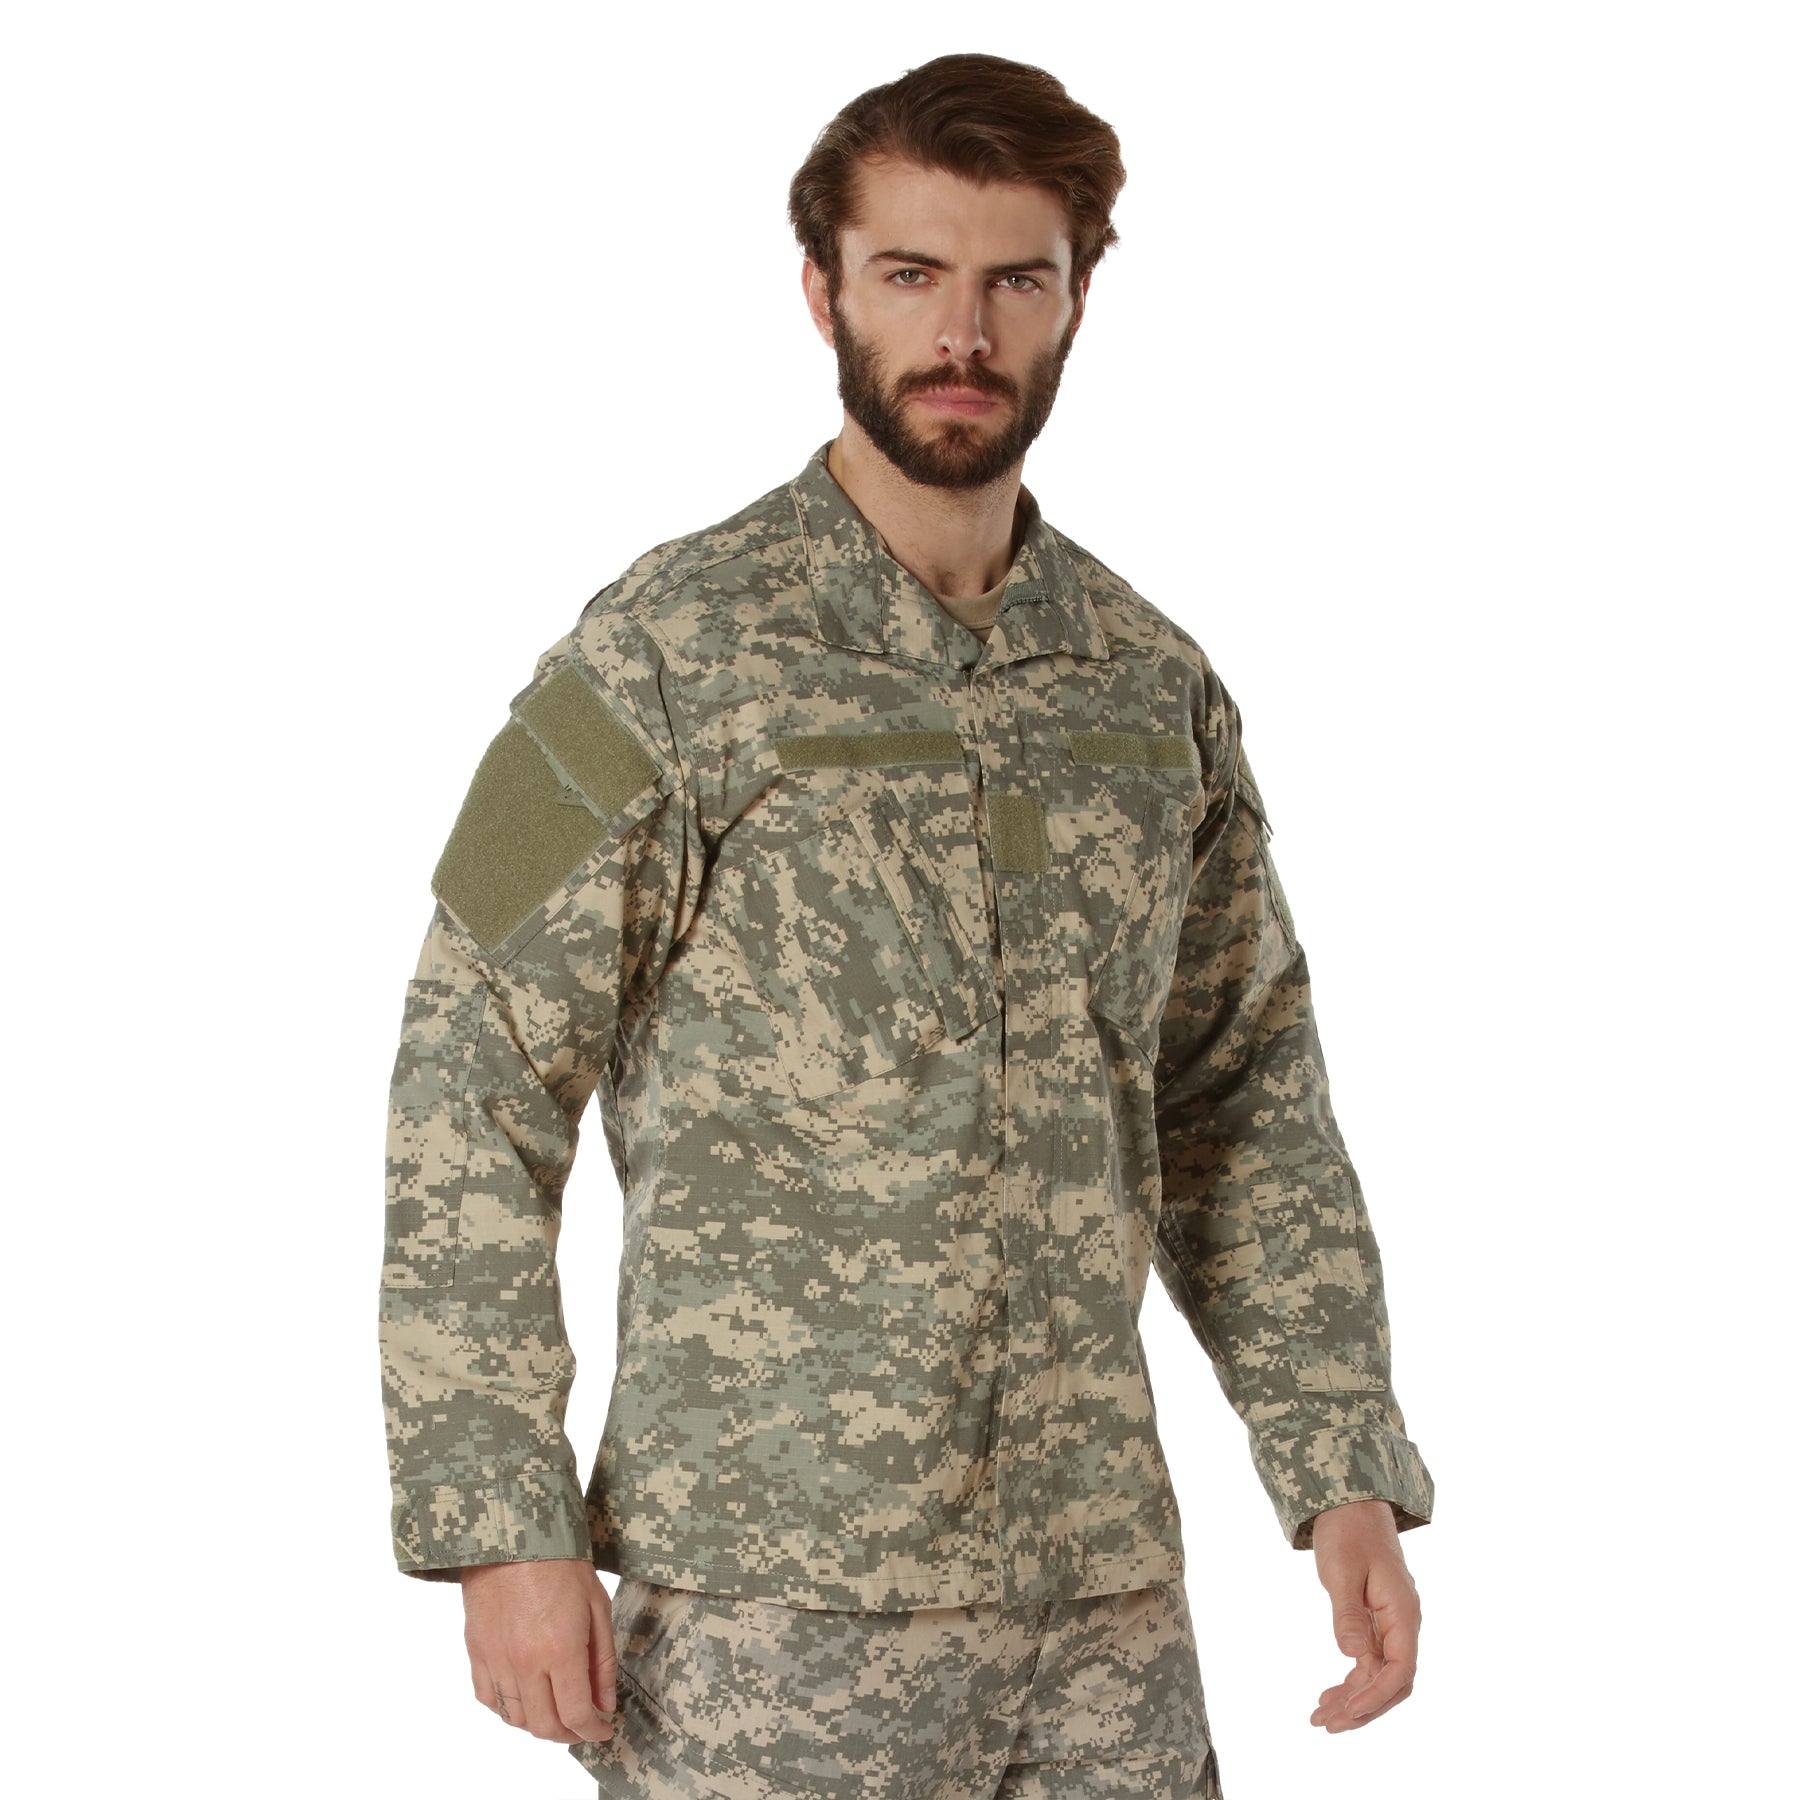 [Military] Digital Camo Poly/Cotton Rip-Stop Combat Uniform Shirts ACU Digital Camo